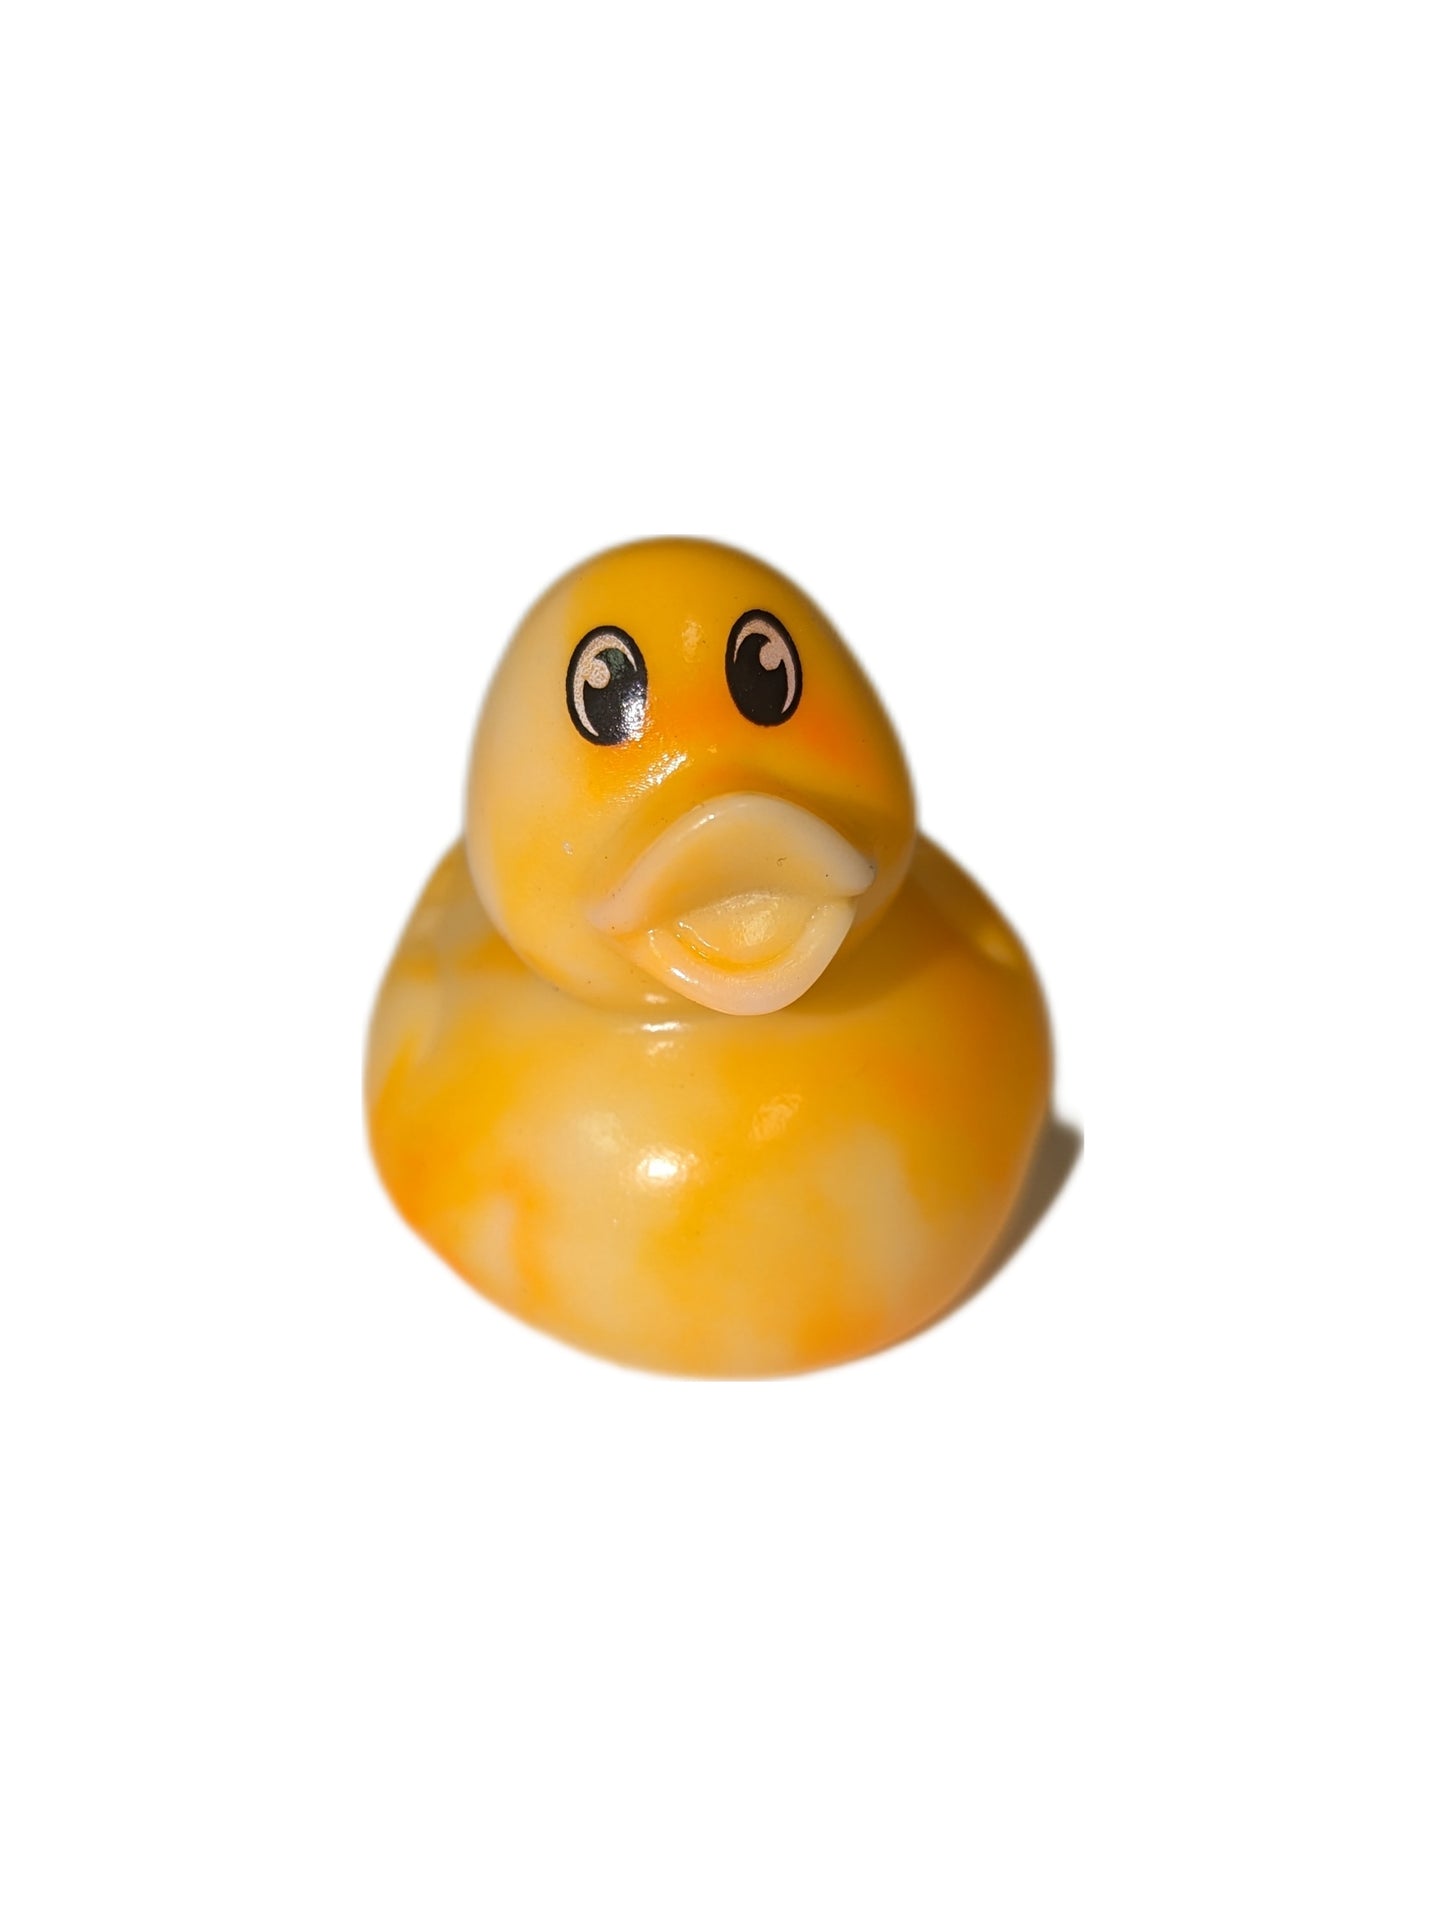 10 Marbled Yellow Ducks - 2" Rubber Ducks